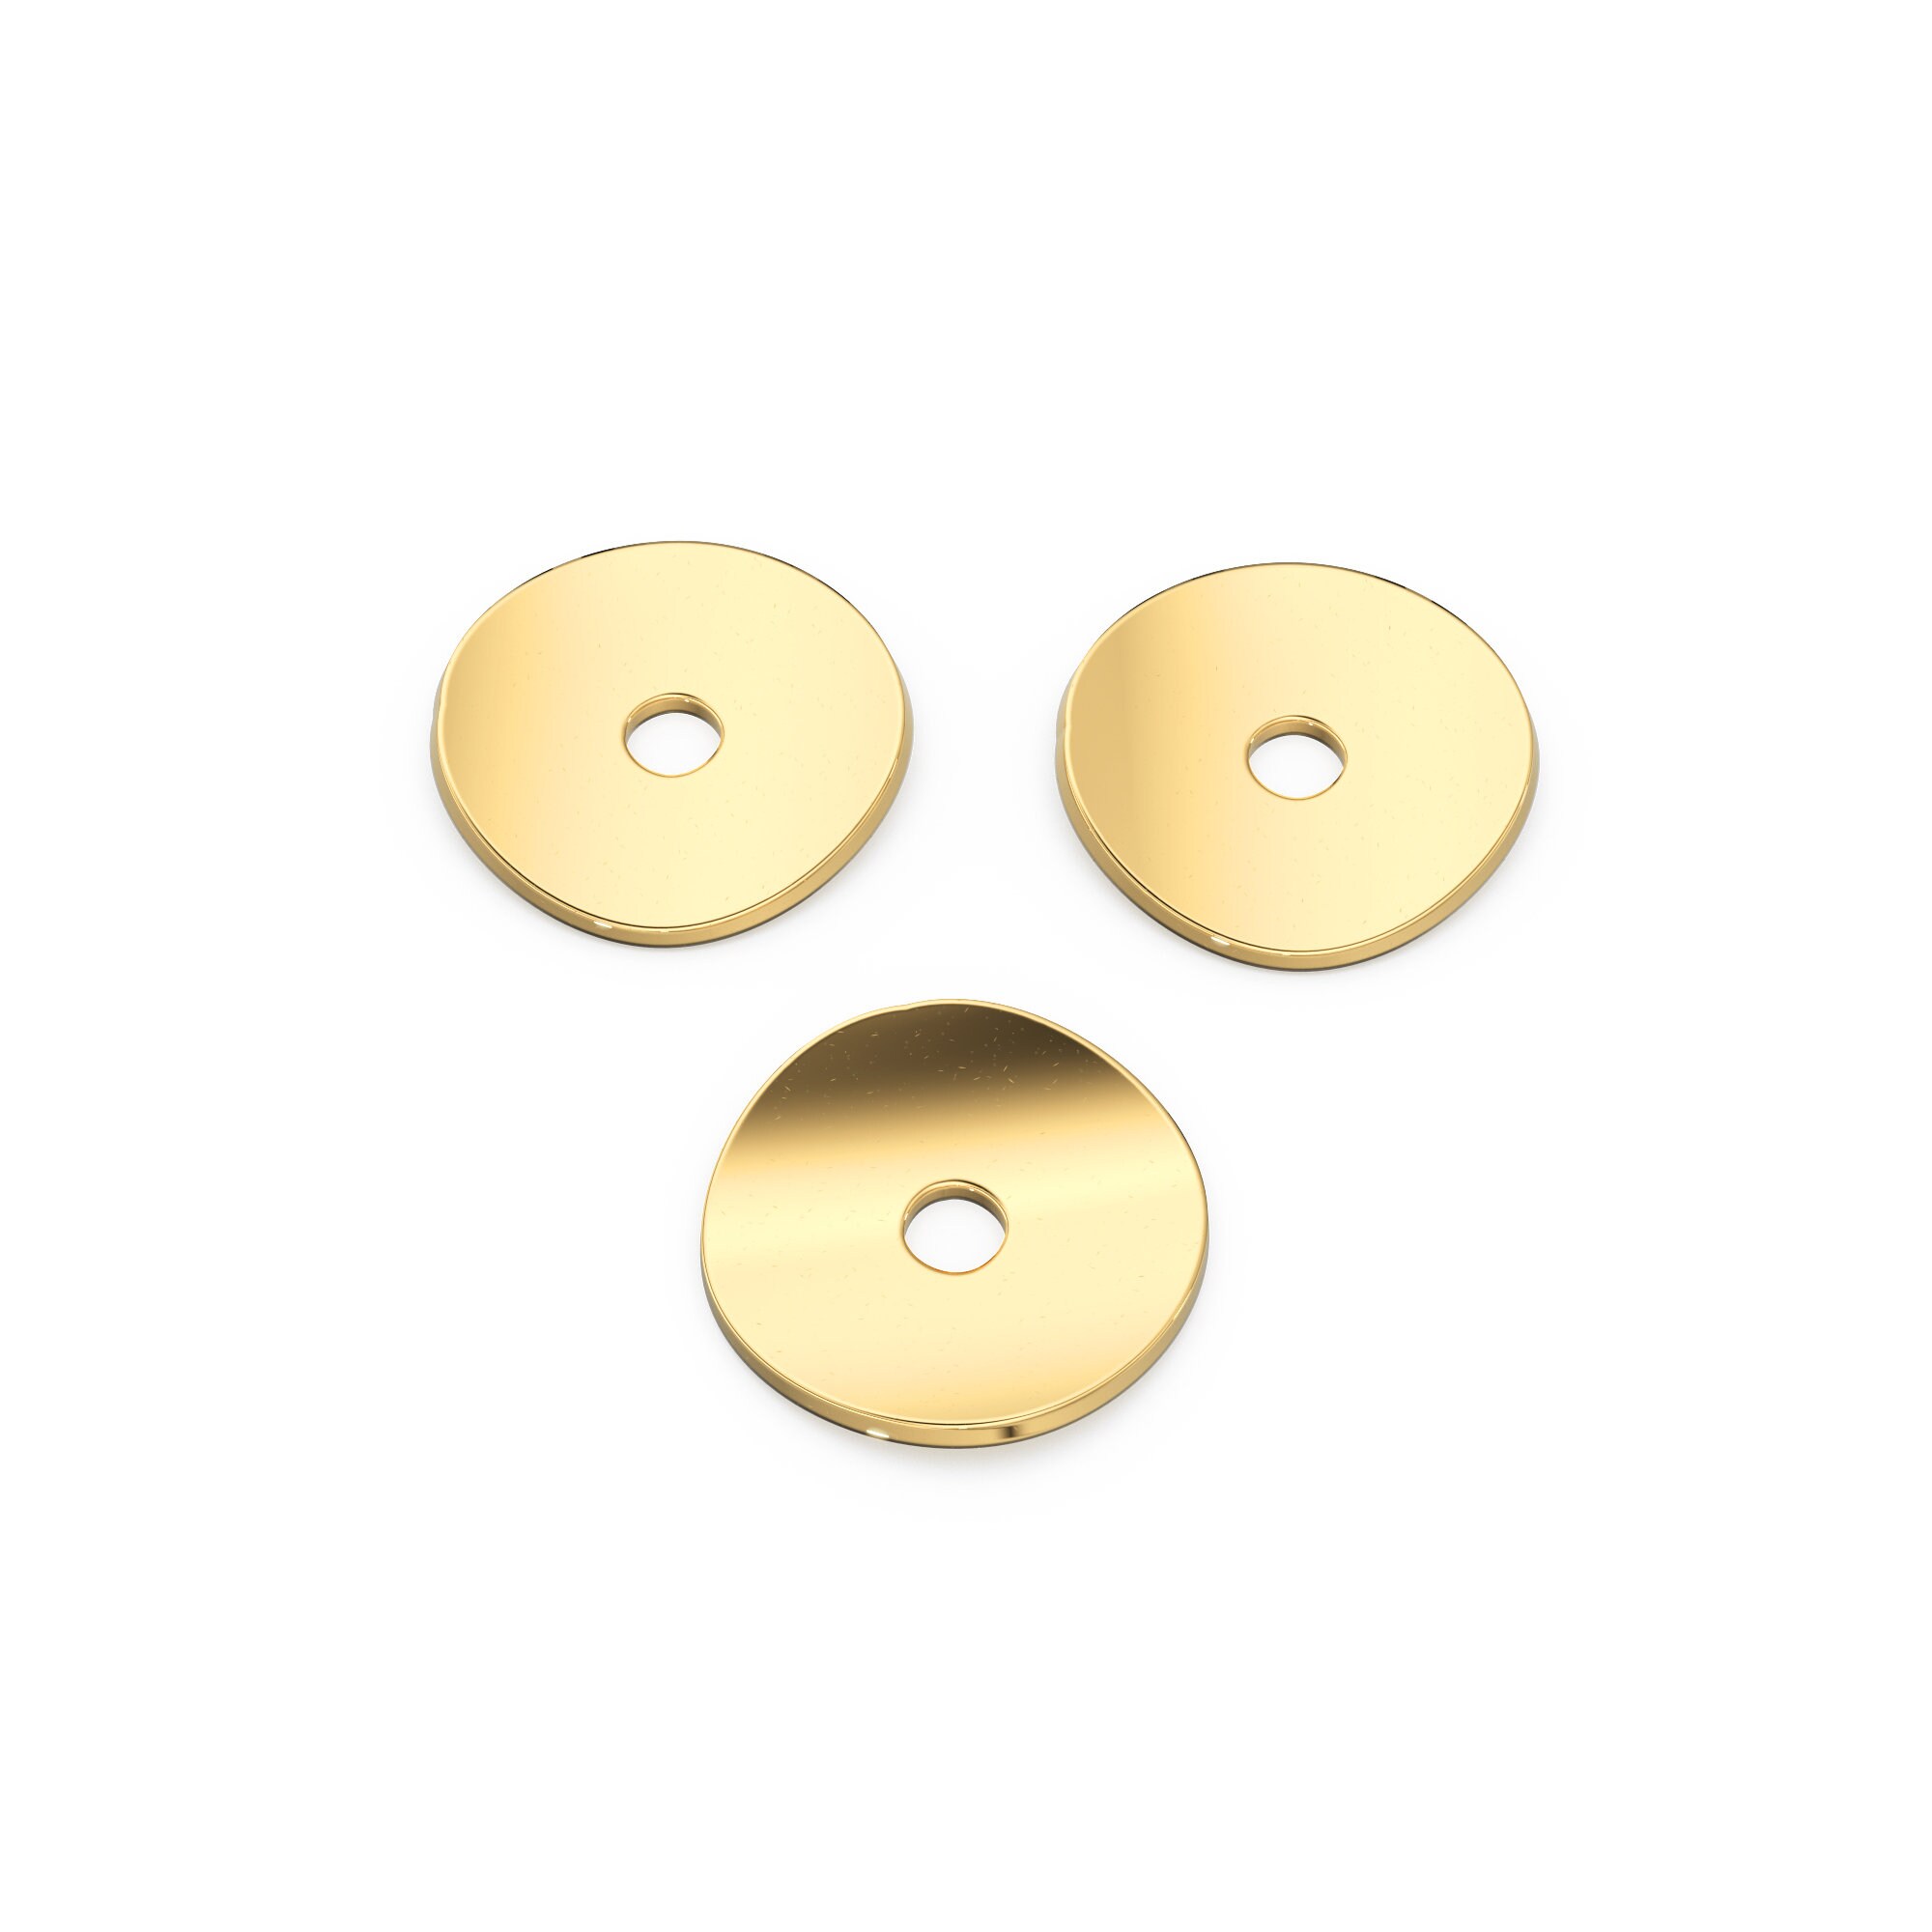 Gold Flat Spacer Beads, 20- 260 pcs Round Brushed Gold Metal Discs